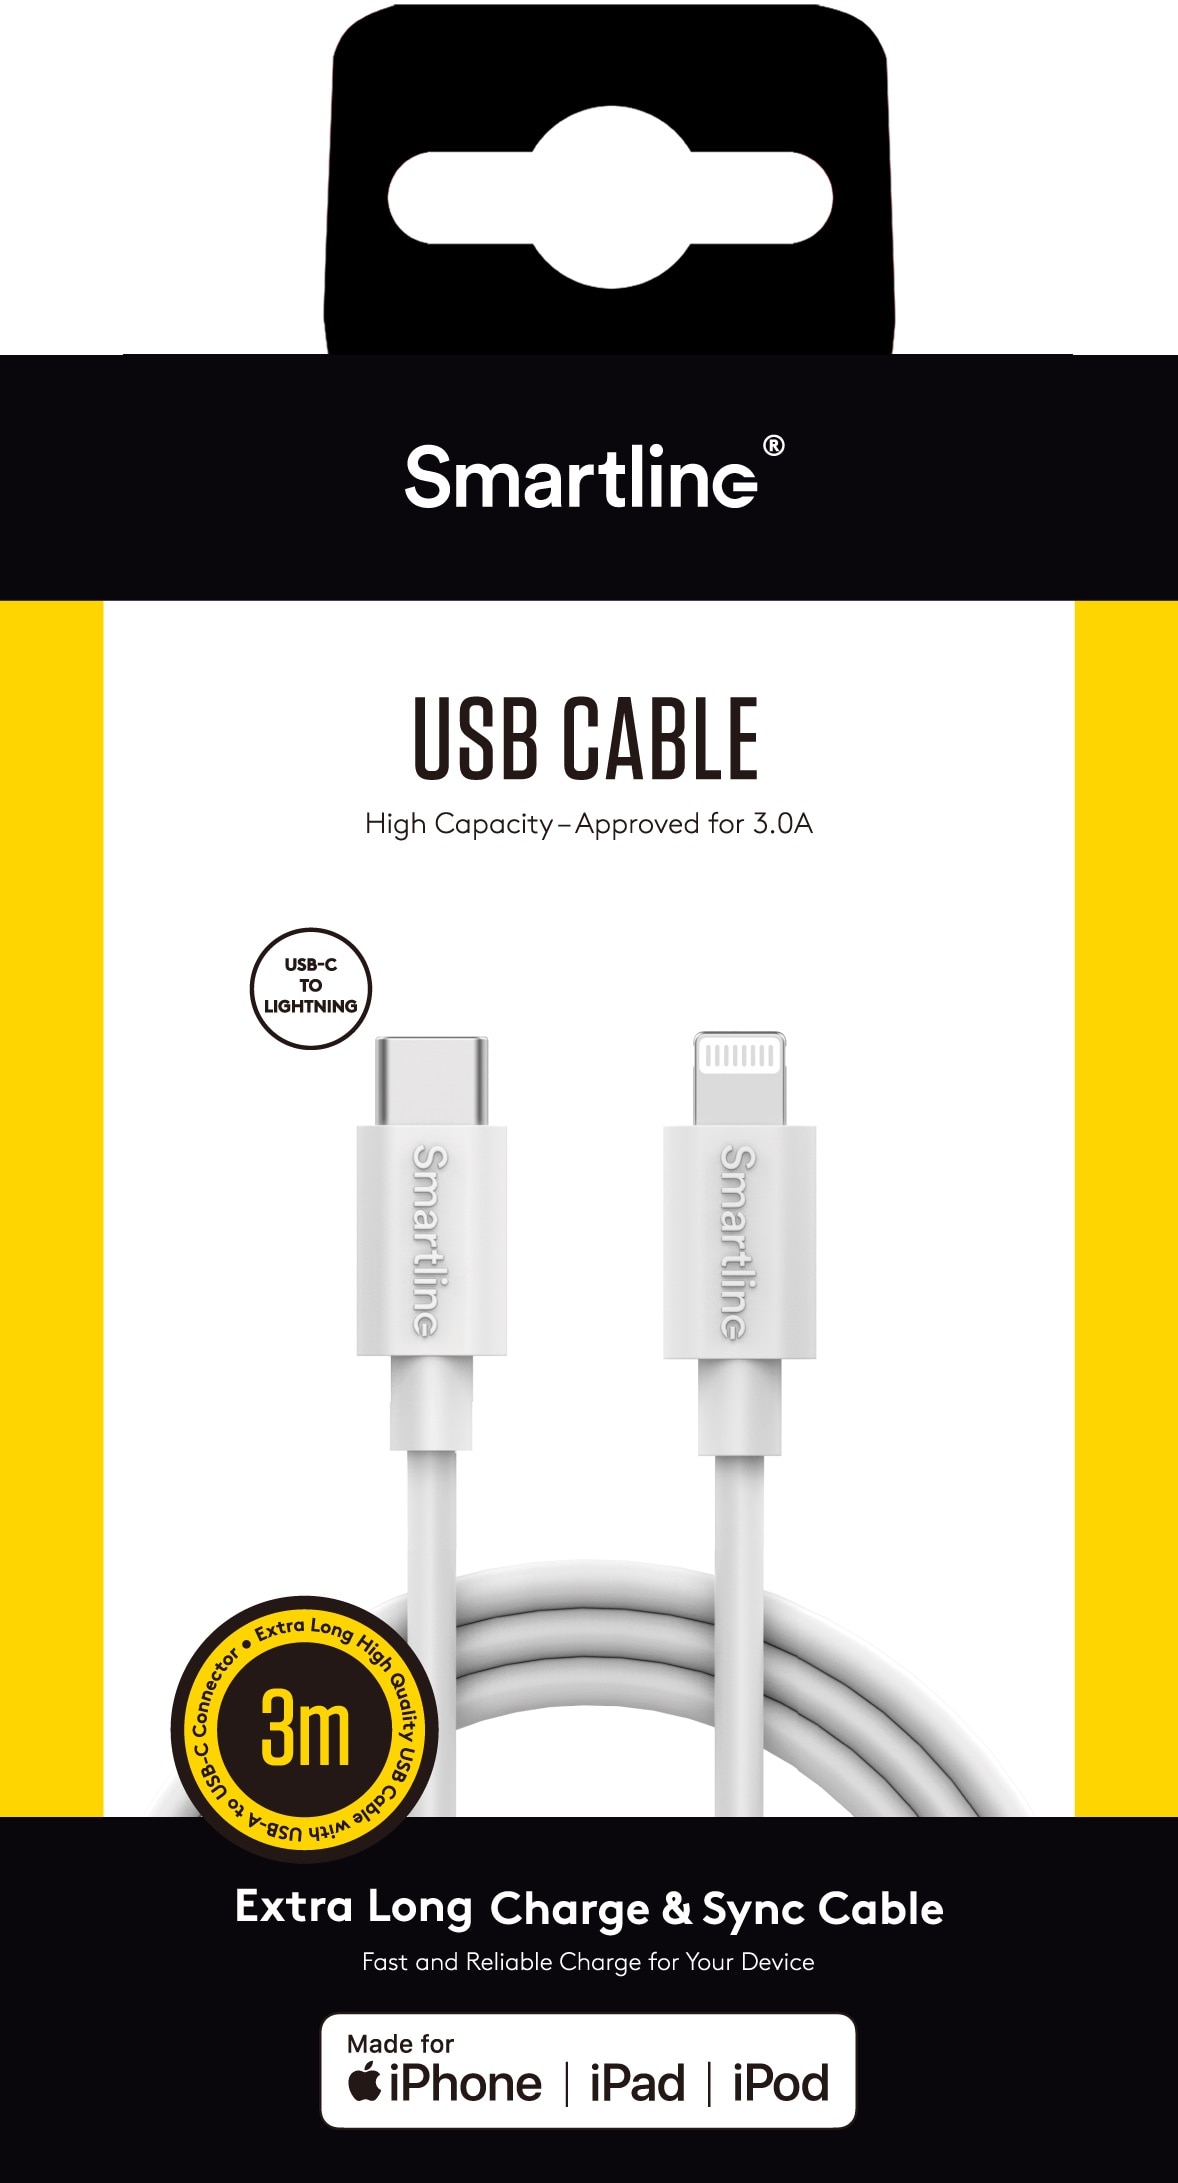 USB Cable USB-C to Lightning 3m White